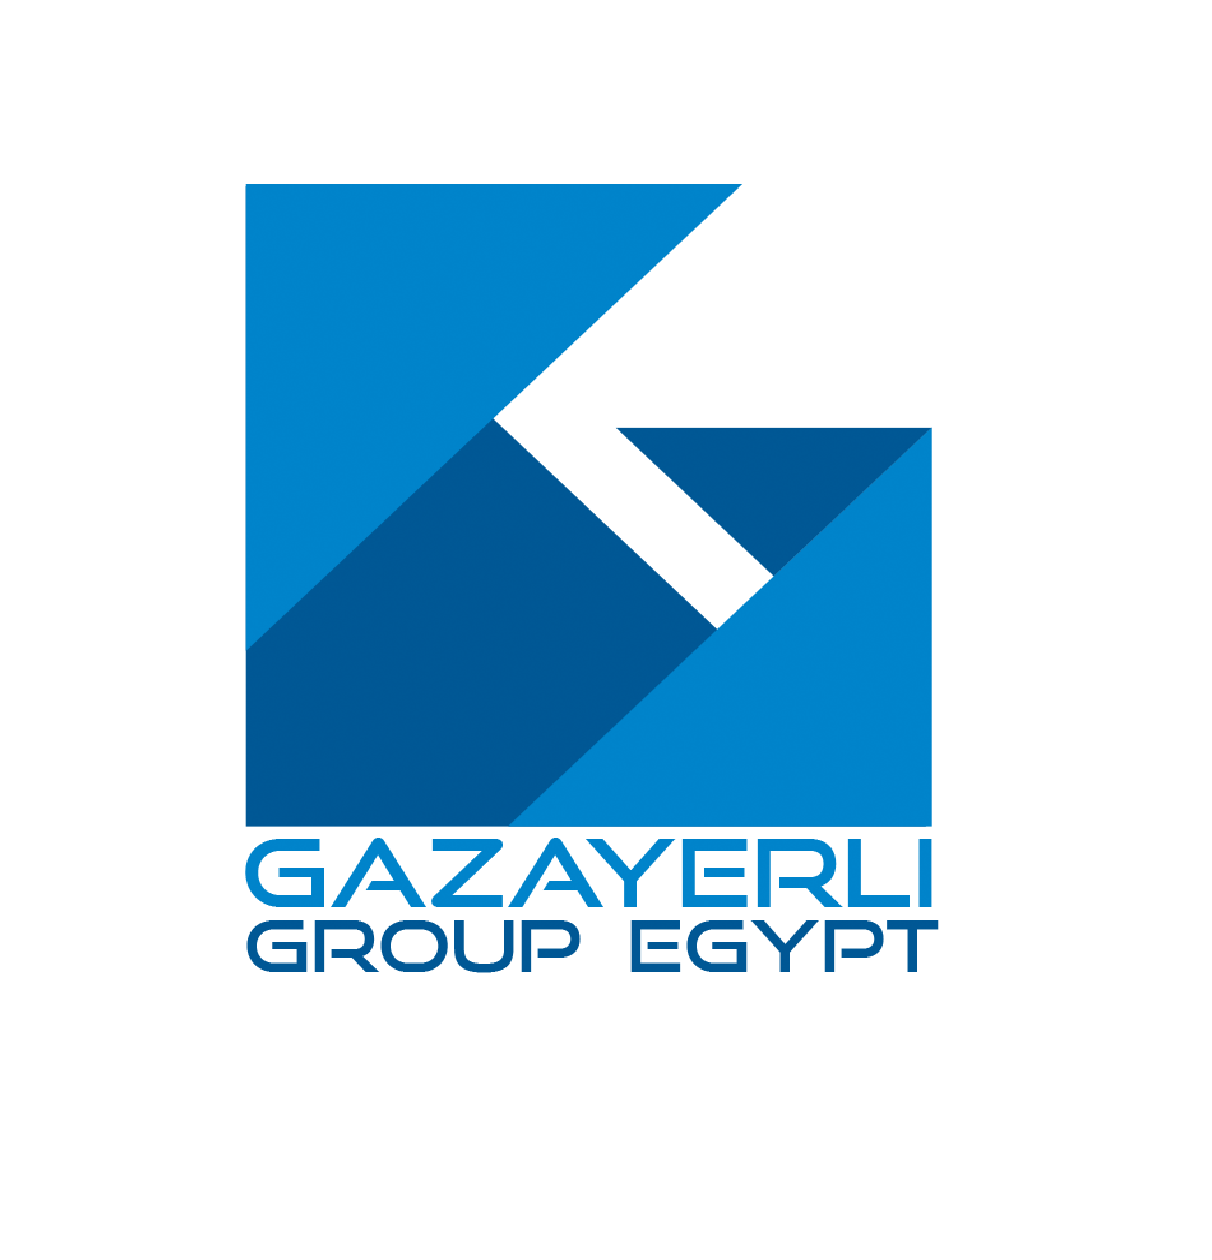 Gazayerli Group Egypt